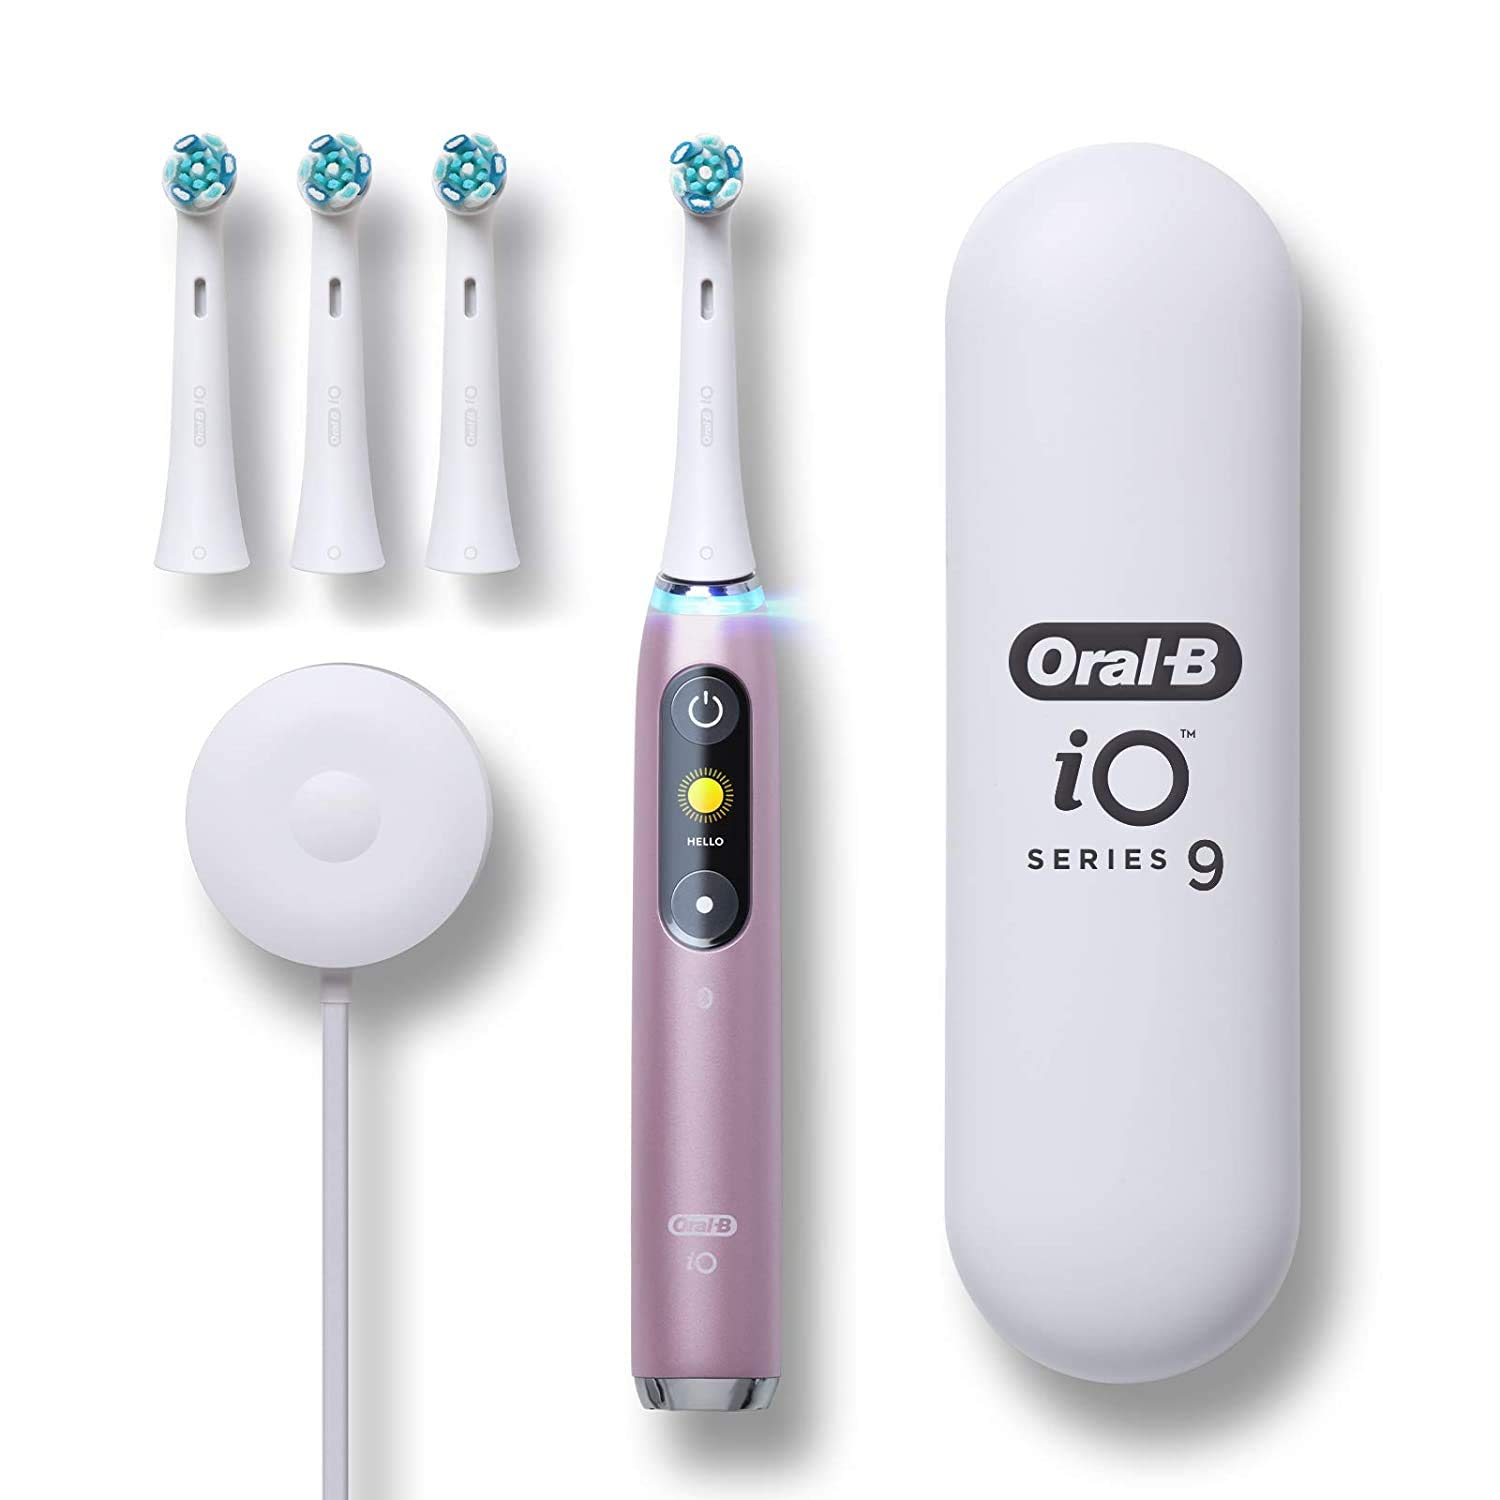 Oral B iO Series 9 - $299